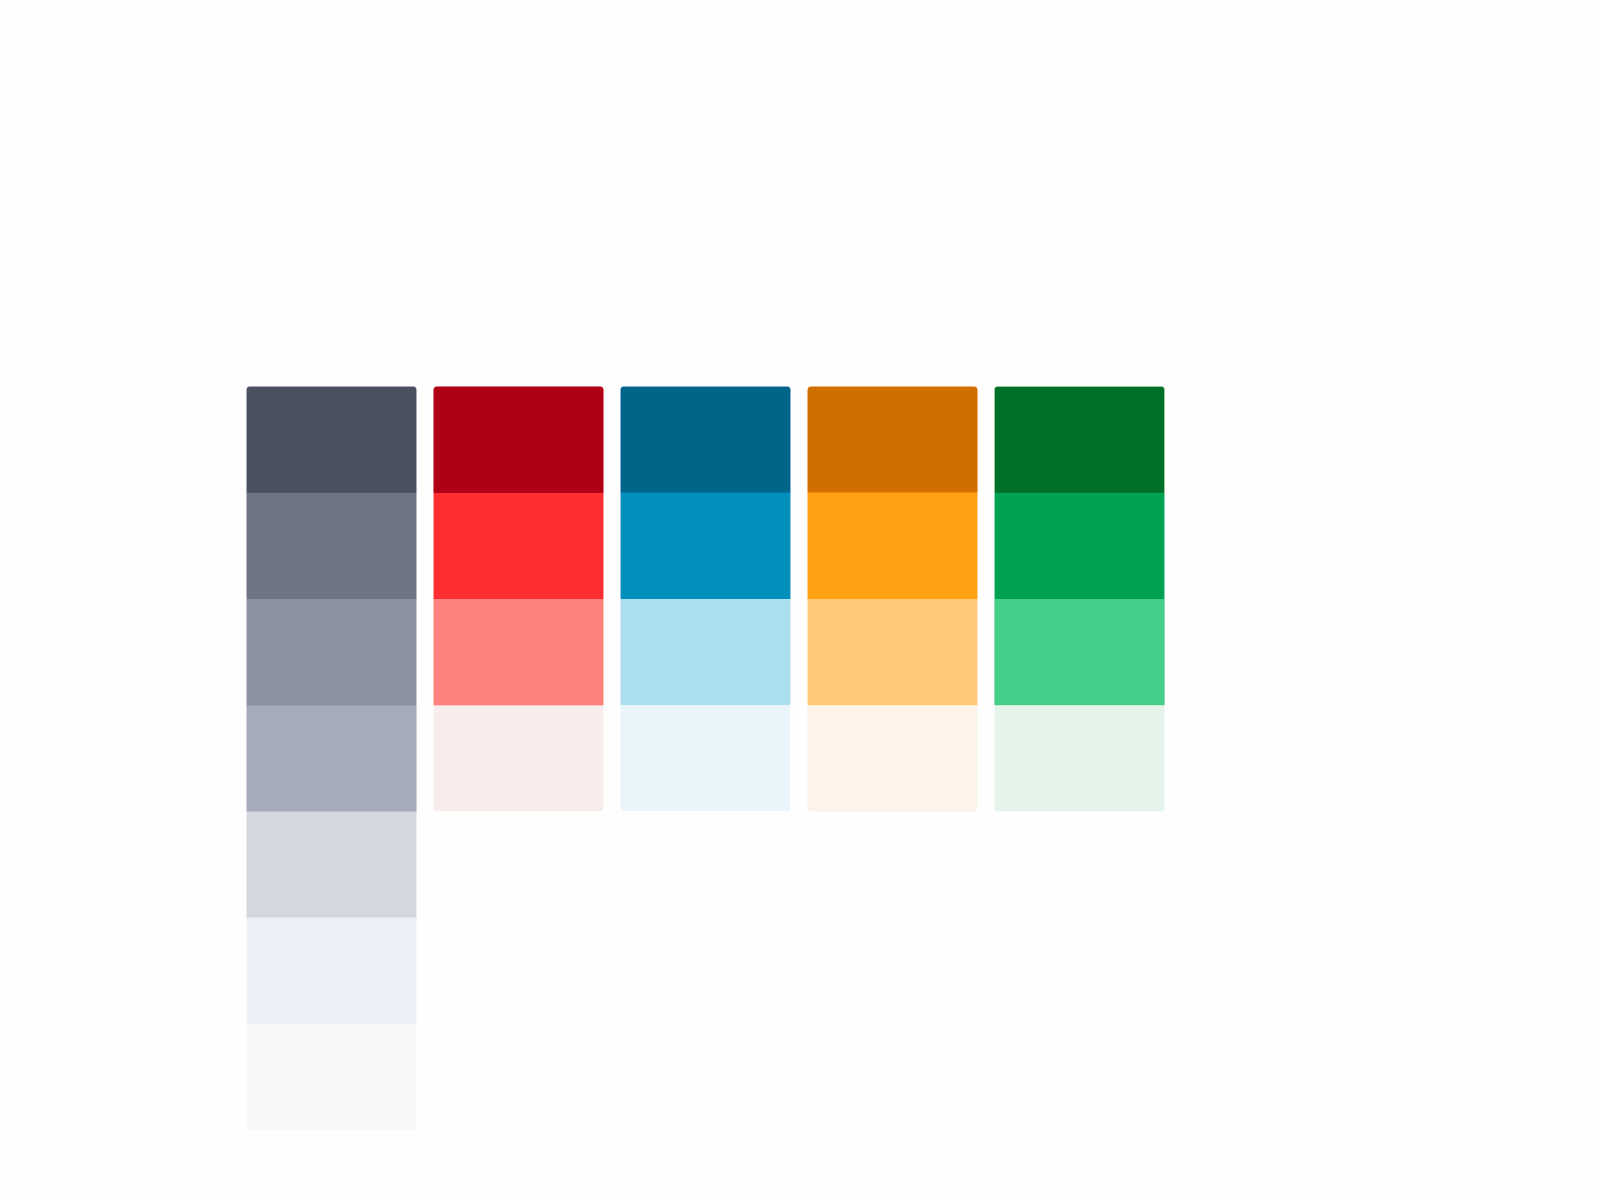 Designing an accessible color scheme, again